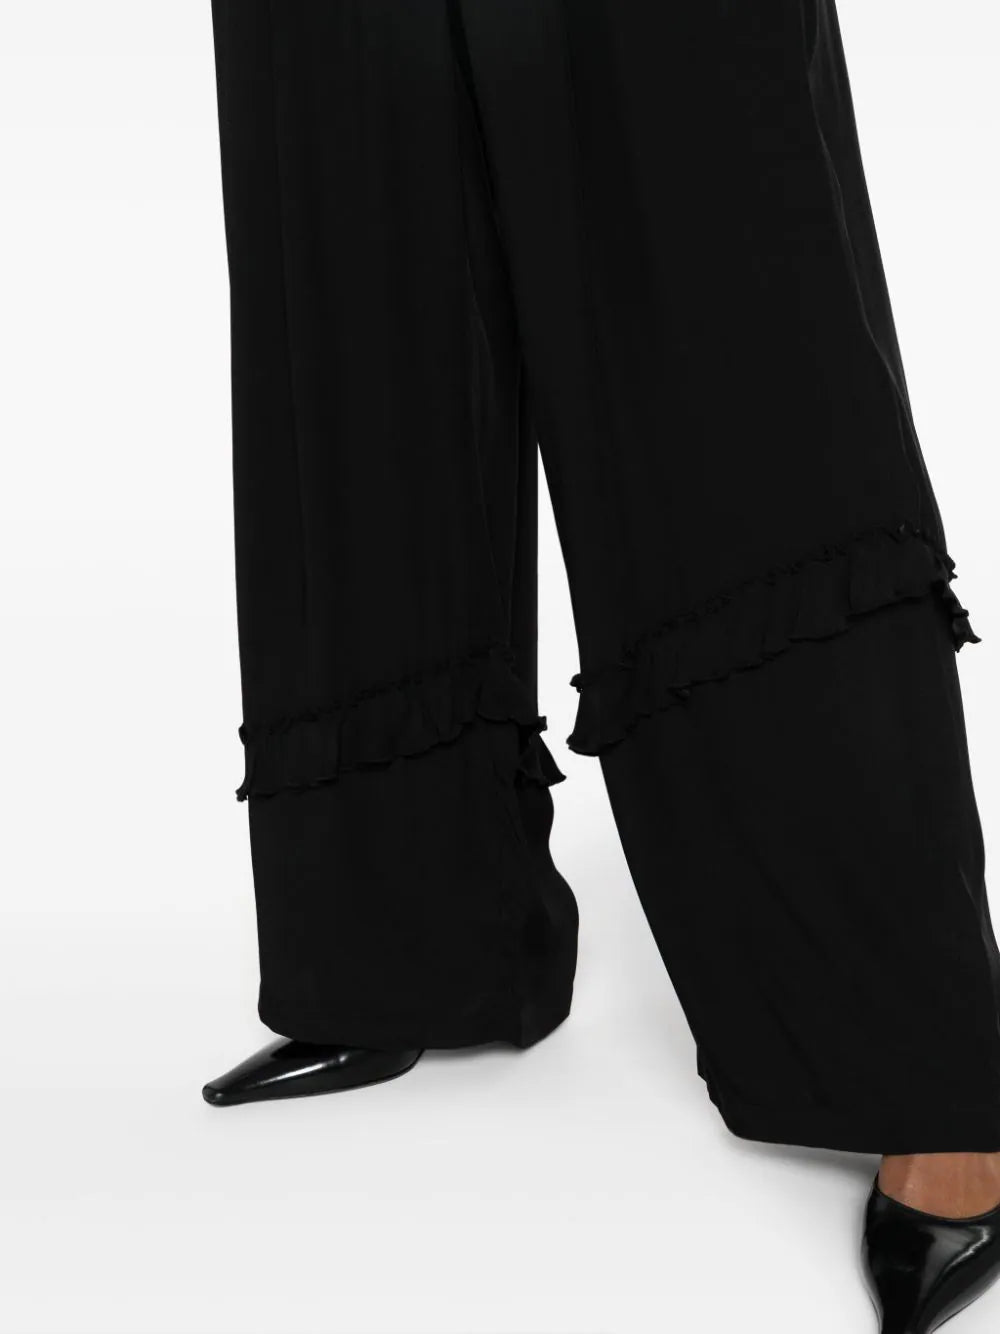 Elastic ruffle pants, black